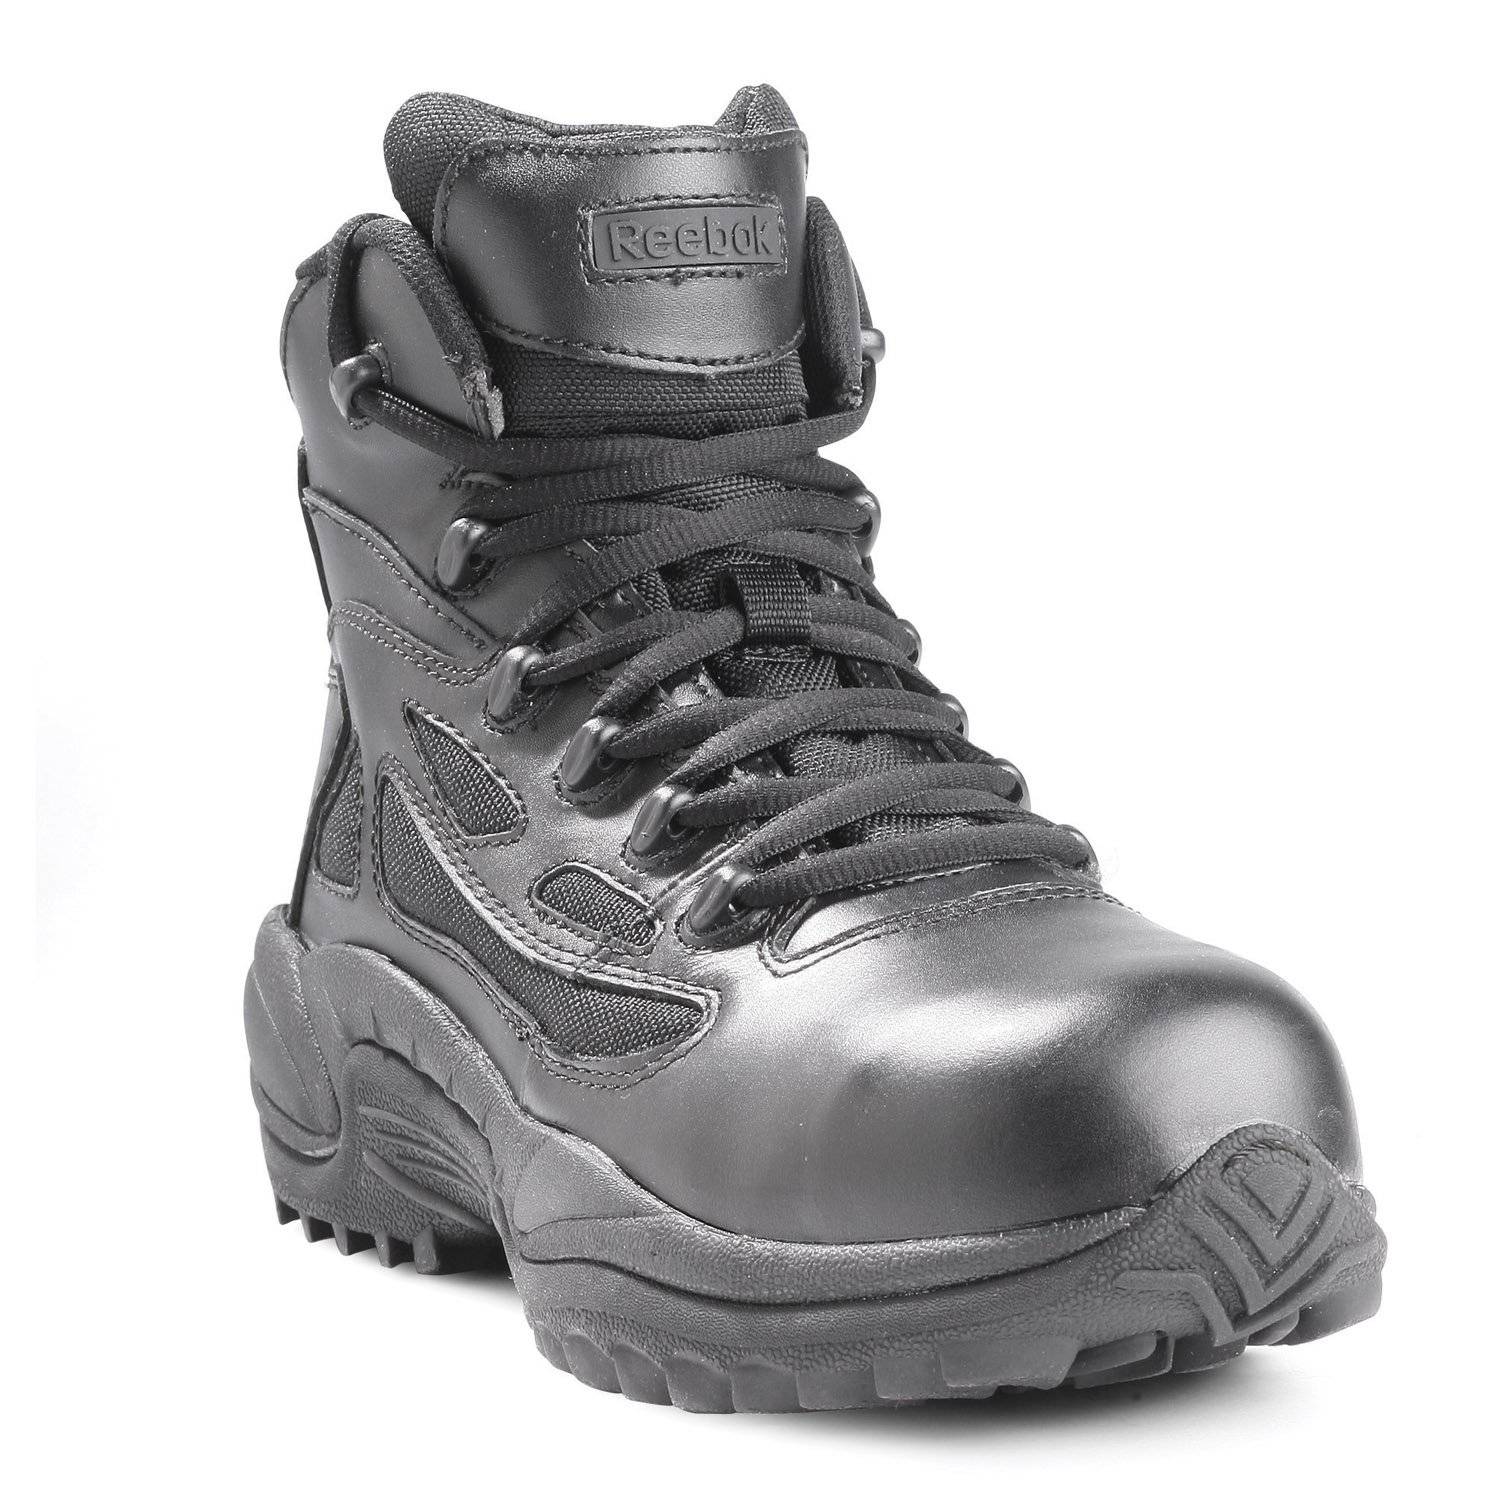 reebok rapid response 6 composite toe tactical work boots